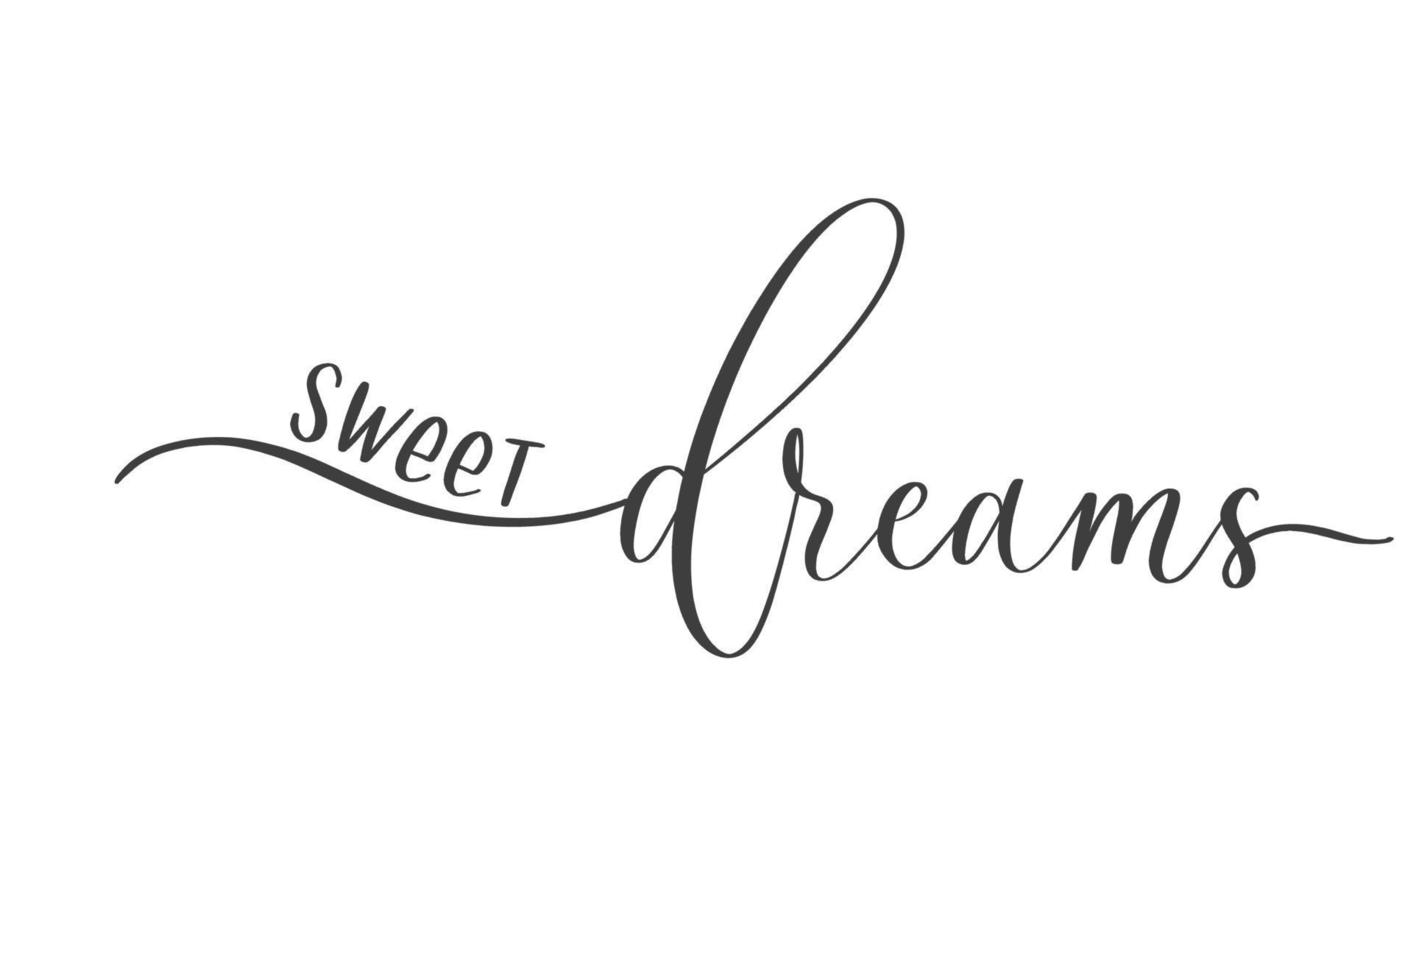 Sweet dreams - calligraphy poster. 4847062 Vector Art at Vecteezy